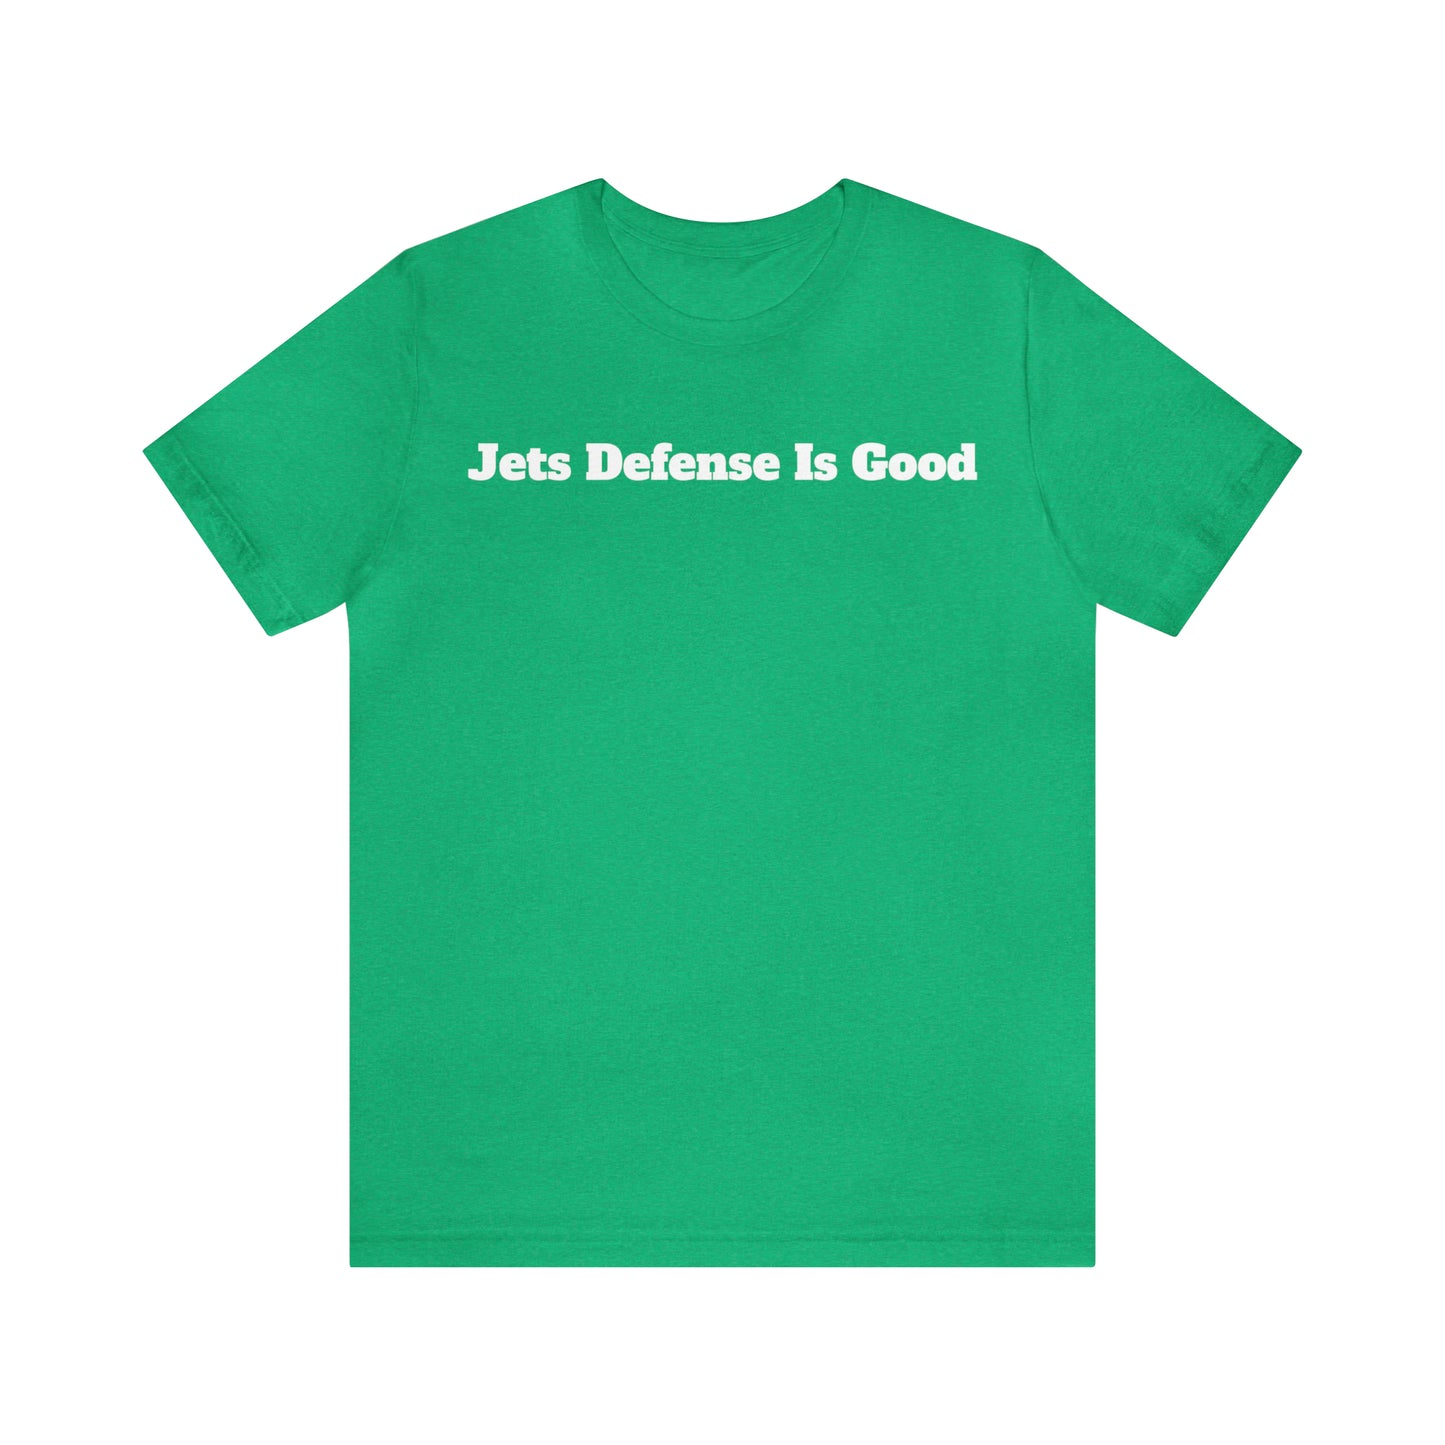 Jets Defense Is Good Shirt